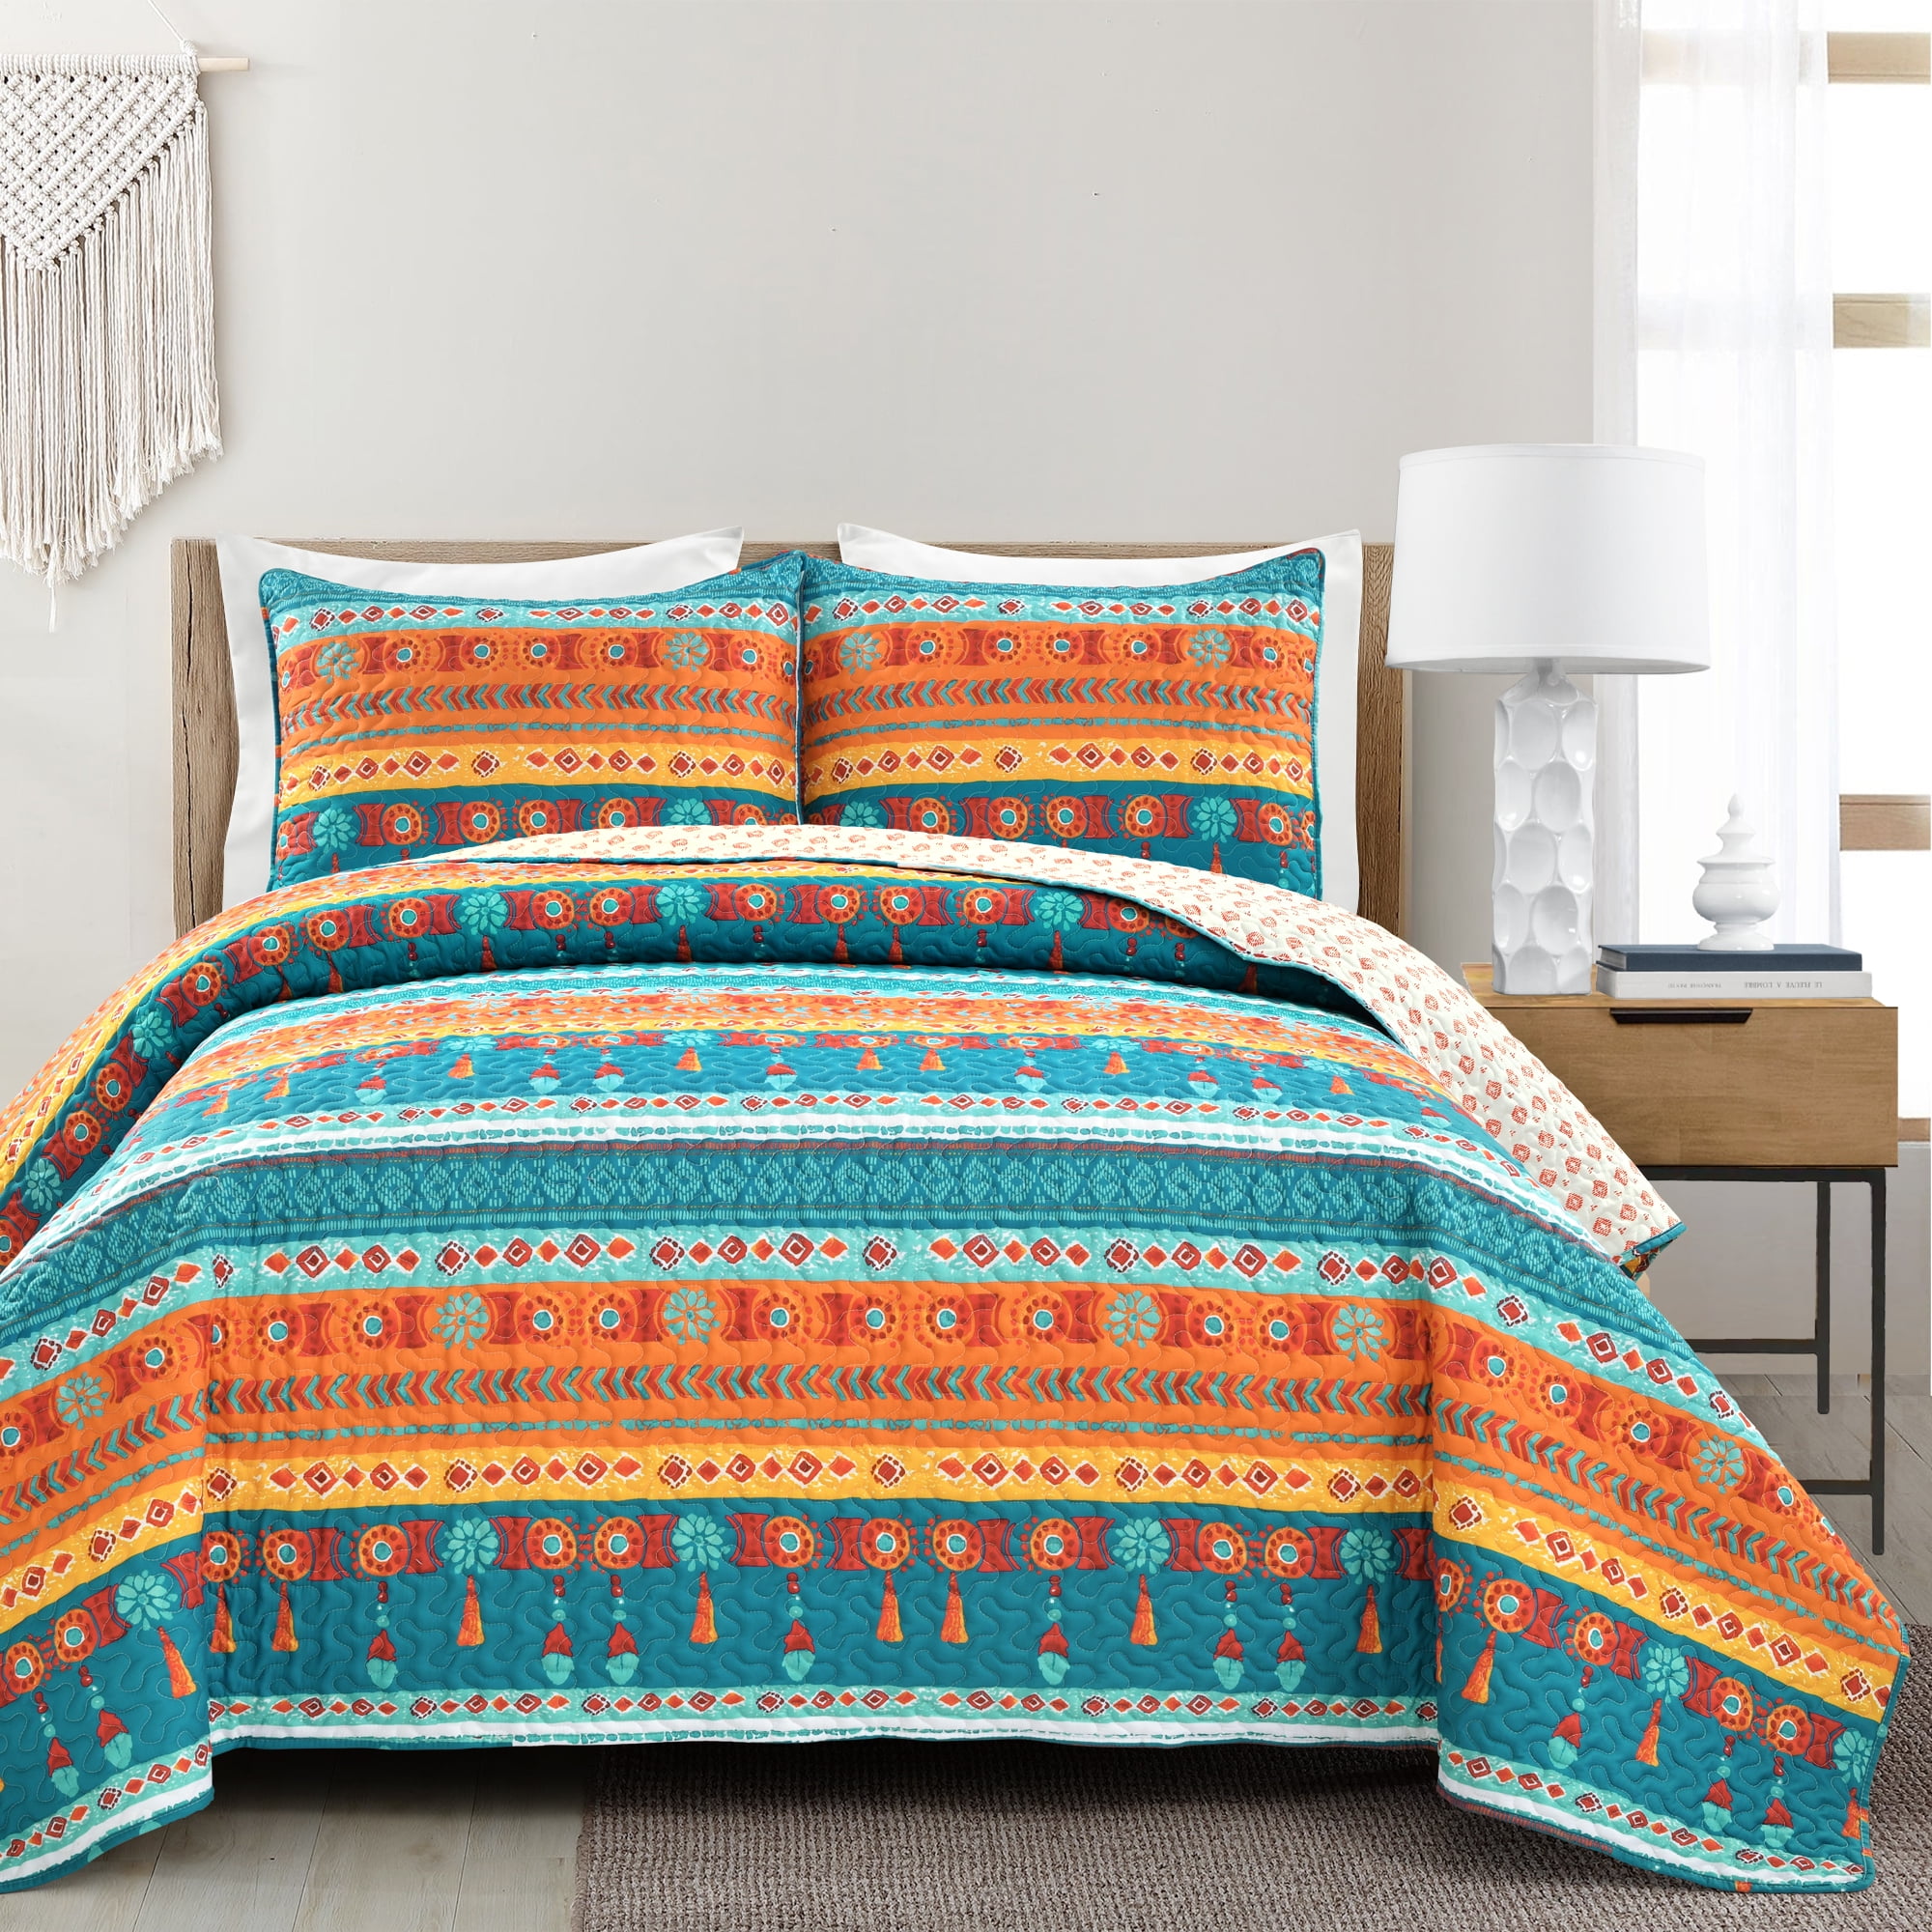 Dreamscene Star Print Throw Blanket Multi-Colour Bedspread 